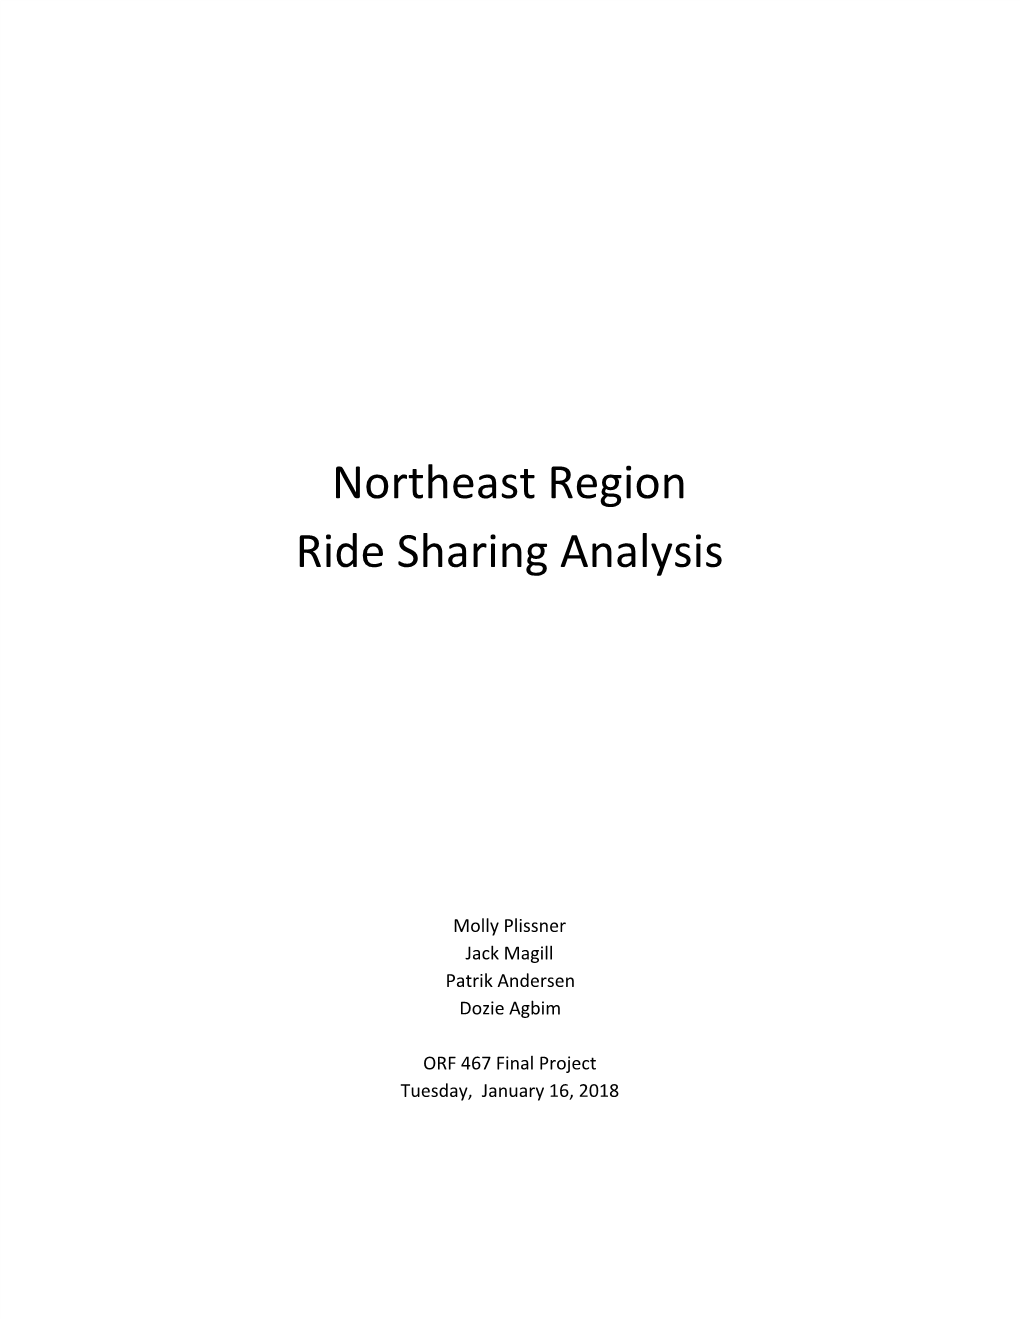 Northeast Region Ride Sharing Analysis